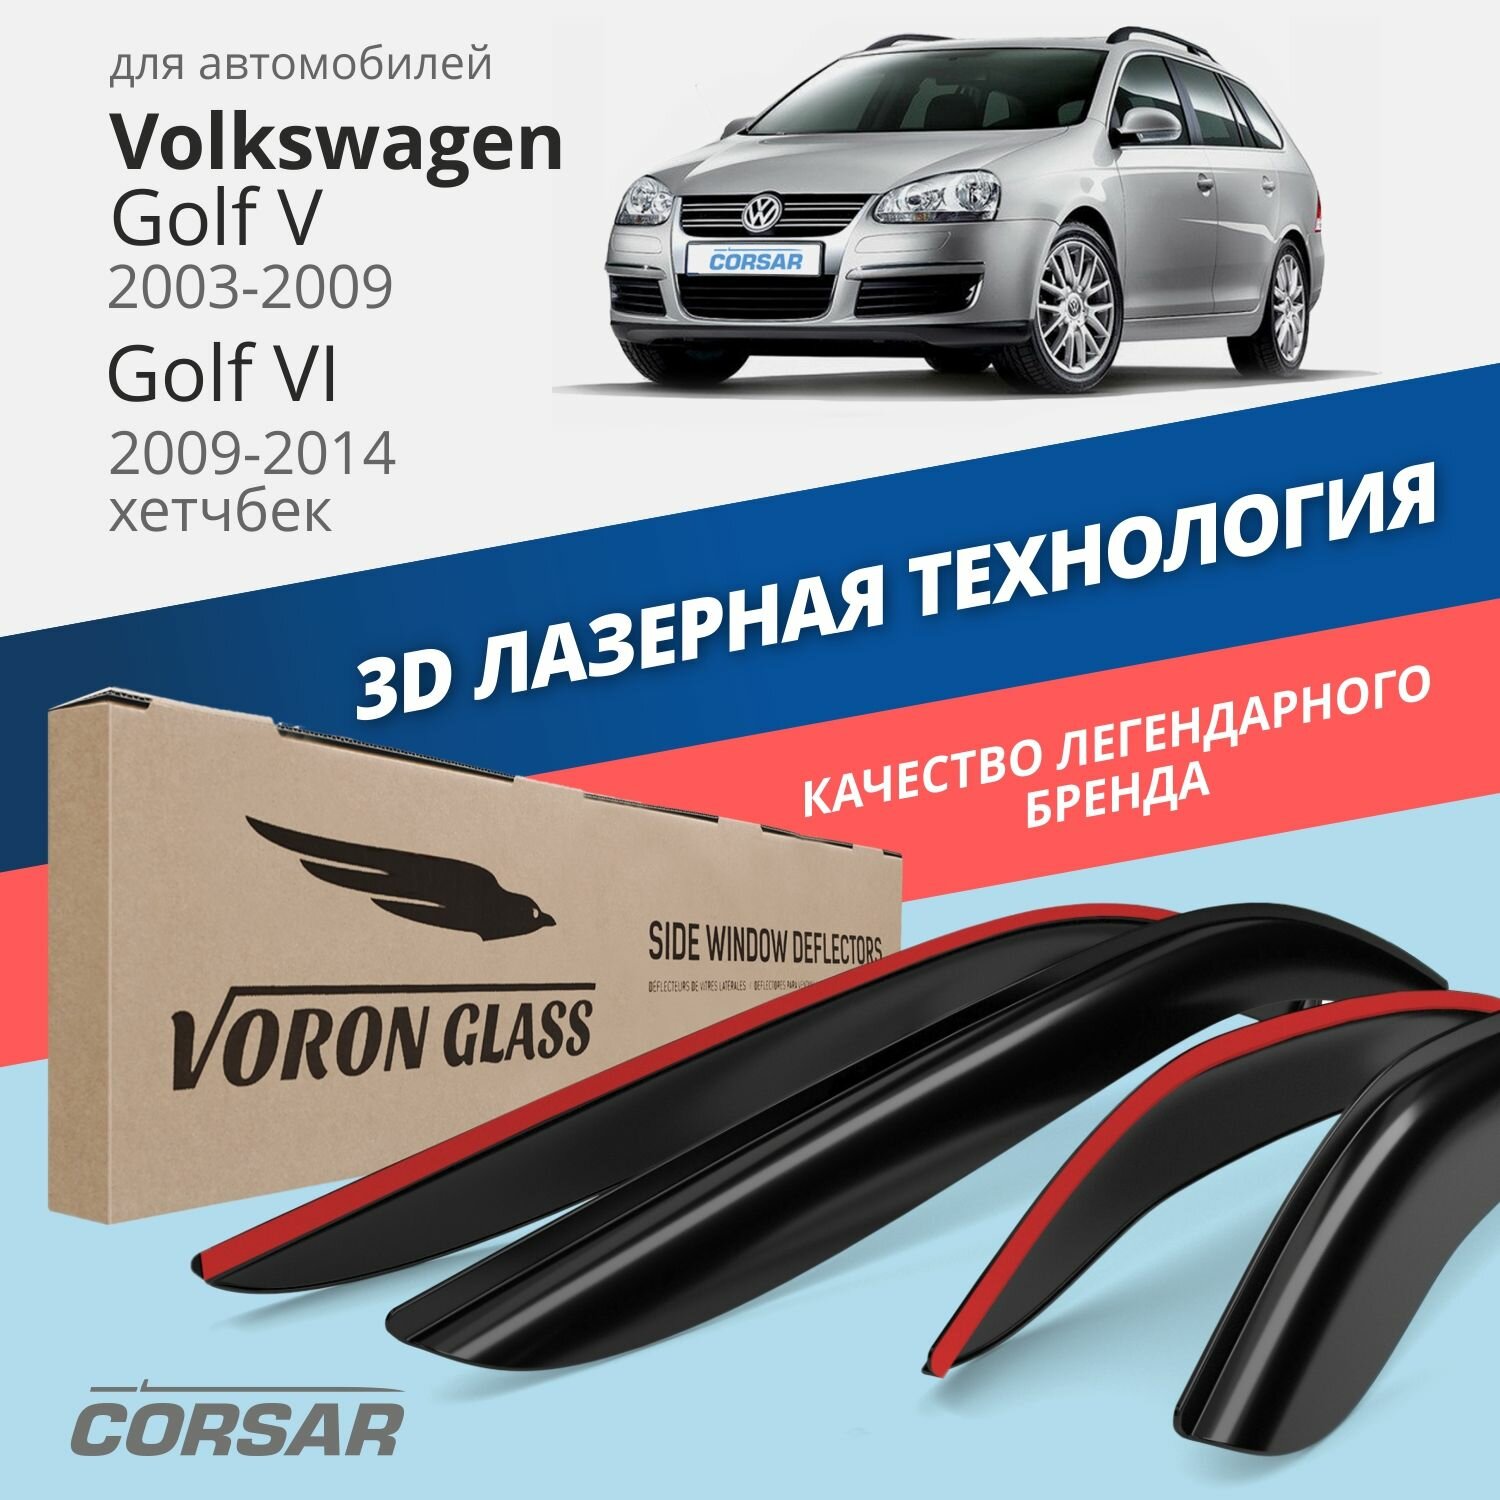 Дефлекторы окон Voron Glass серия Corsar для Volkswagen Golf V 2003-2009 / Golf VI 2009-2014 накладные 4 шт.